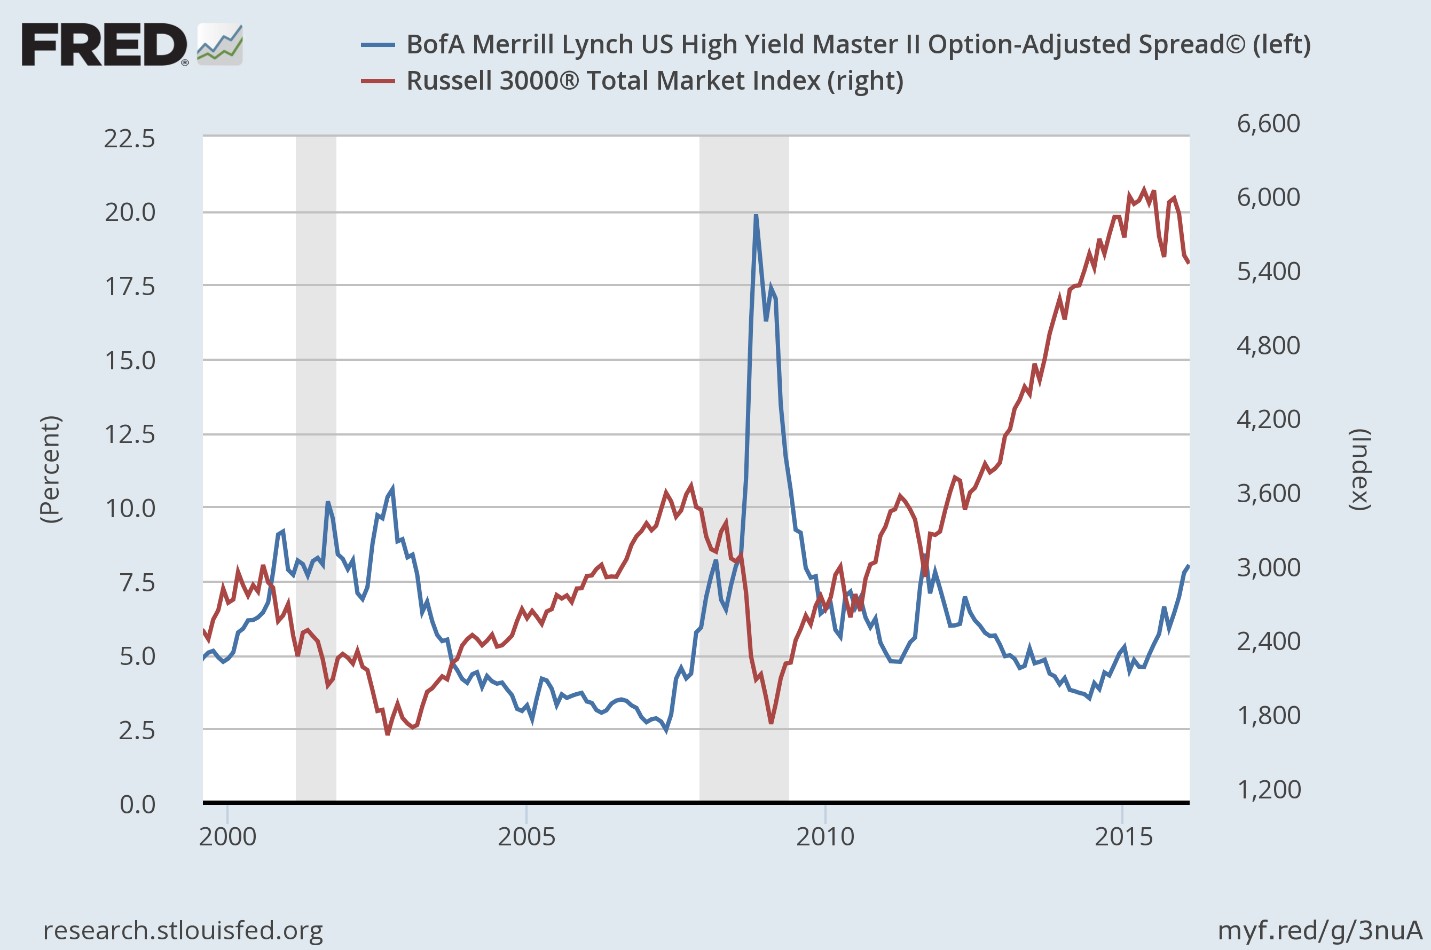 High Yield Bonds vs Russell 3000: 2000-2016